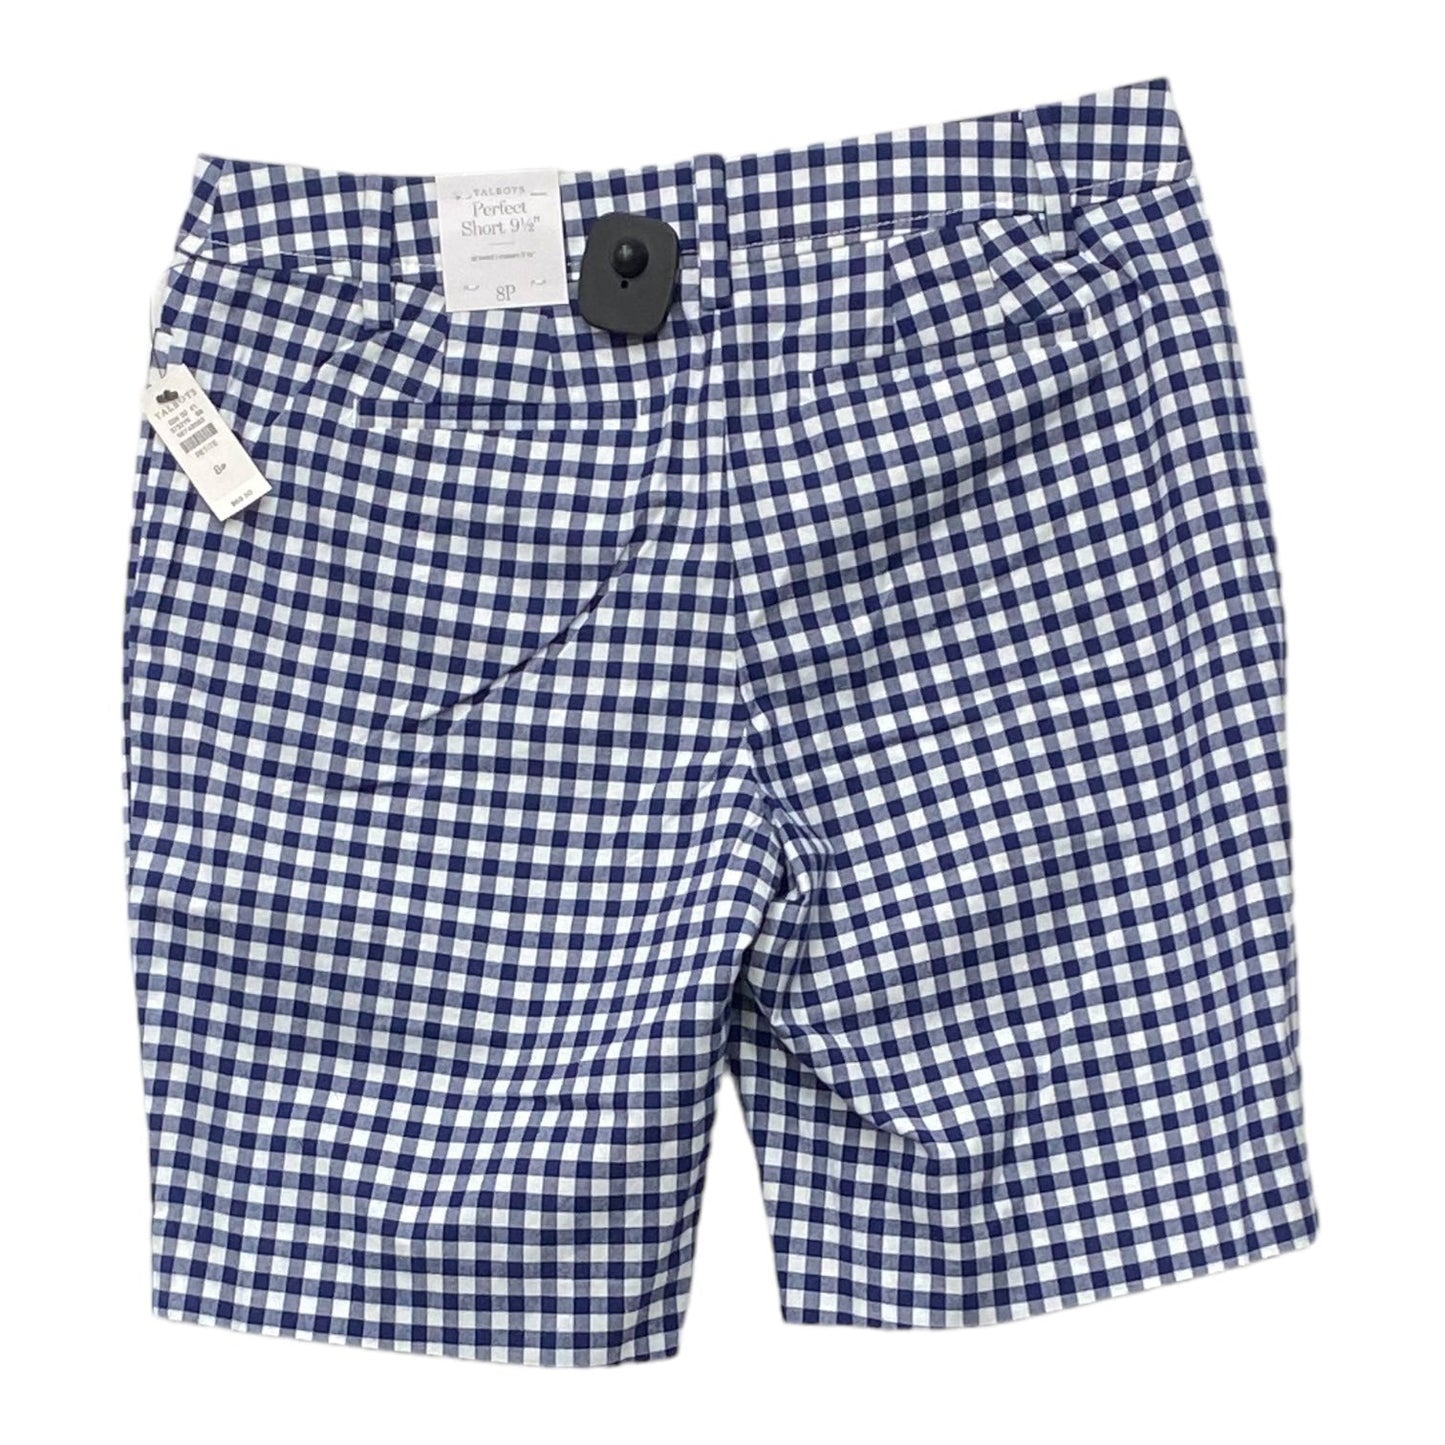 Blue & White Shorts Talbots, Size 8petite